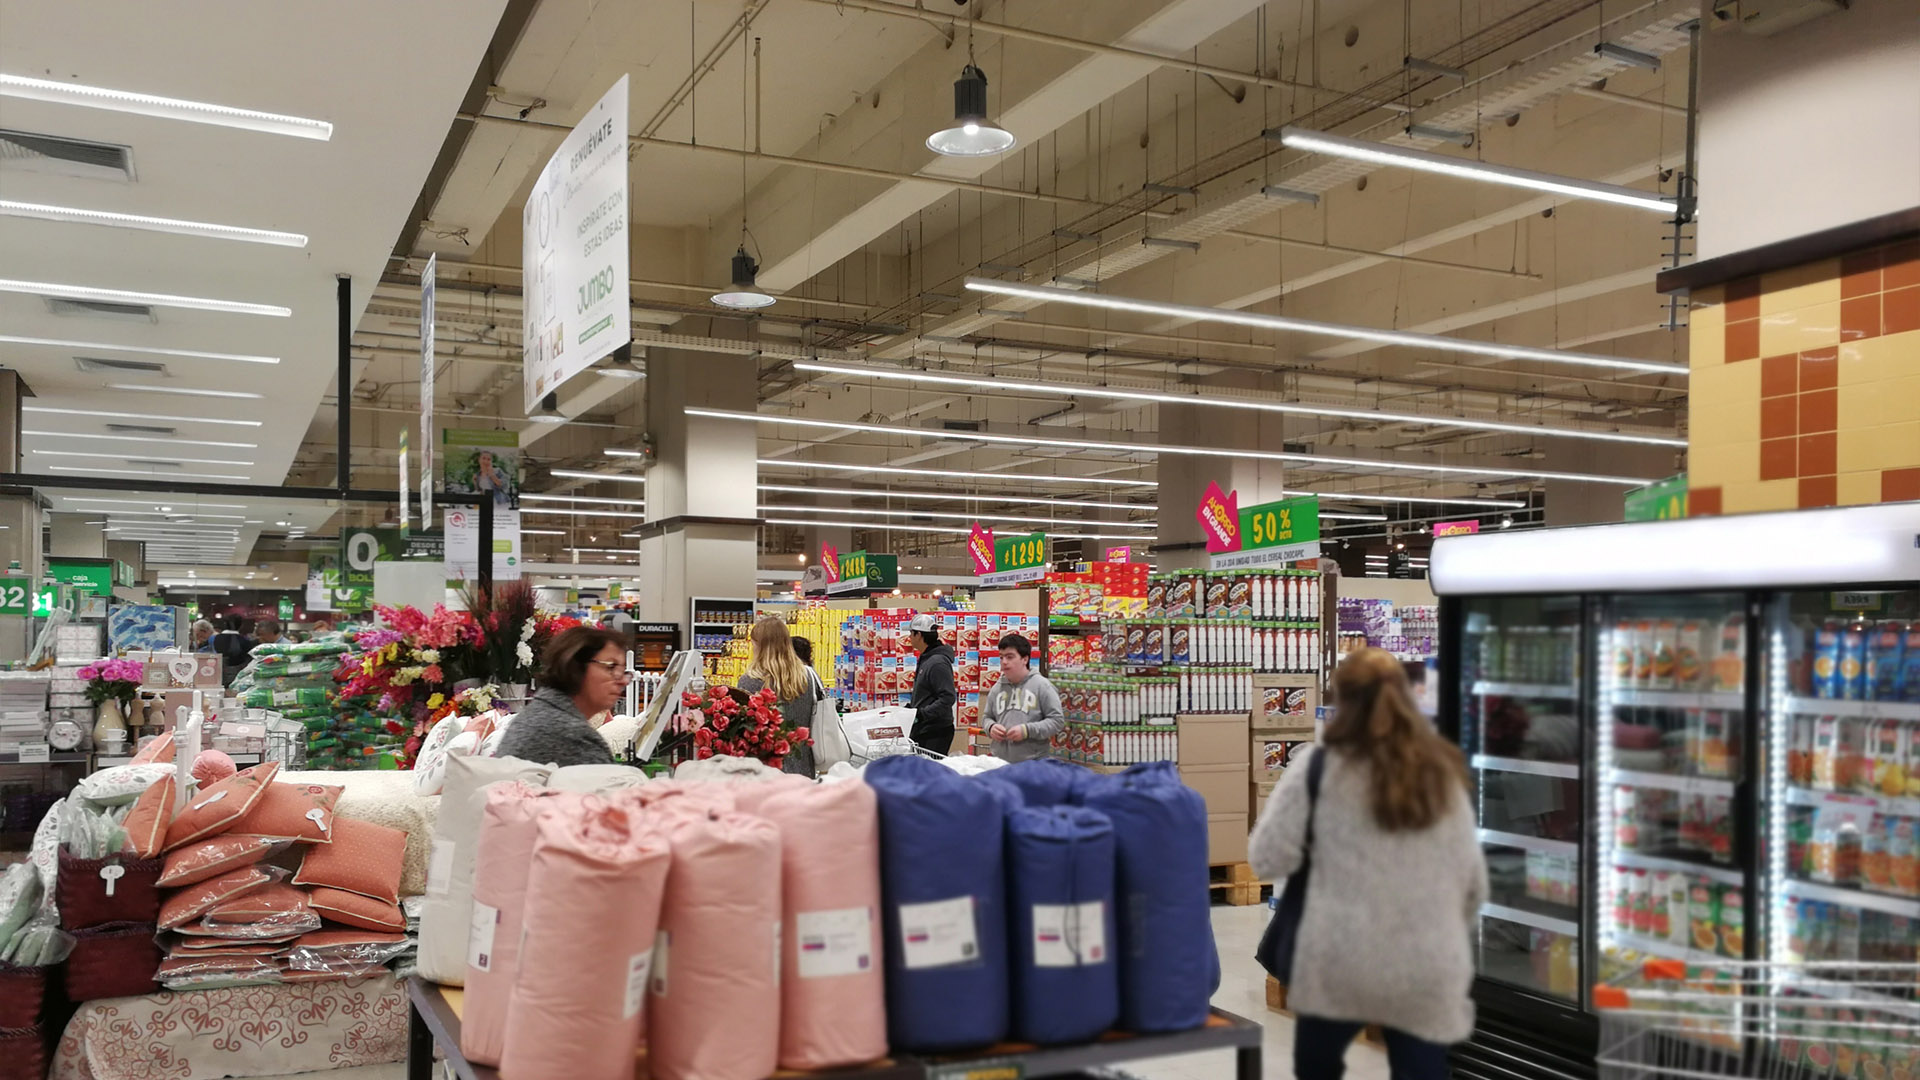 JUMBO supermarket in Brazil (5)